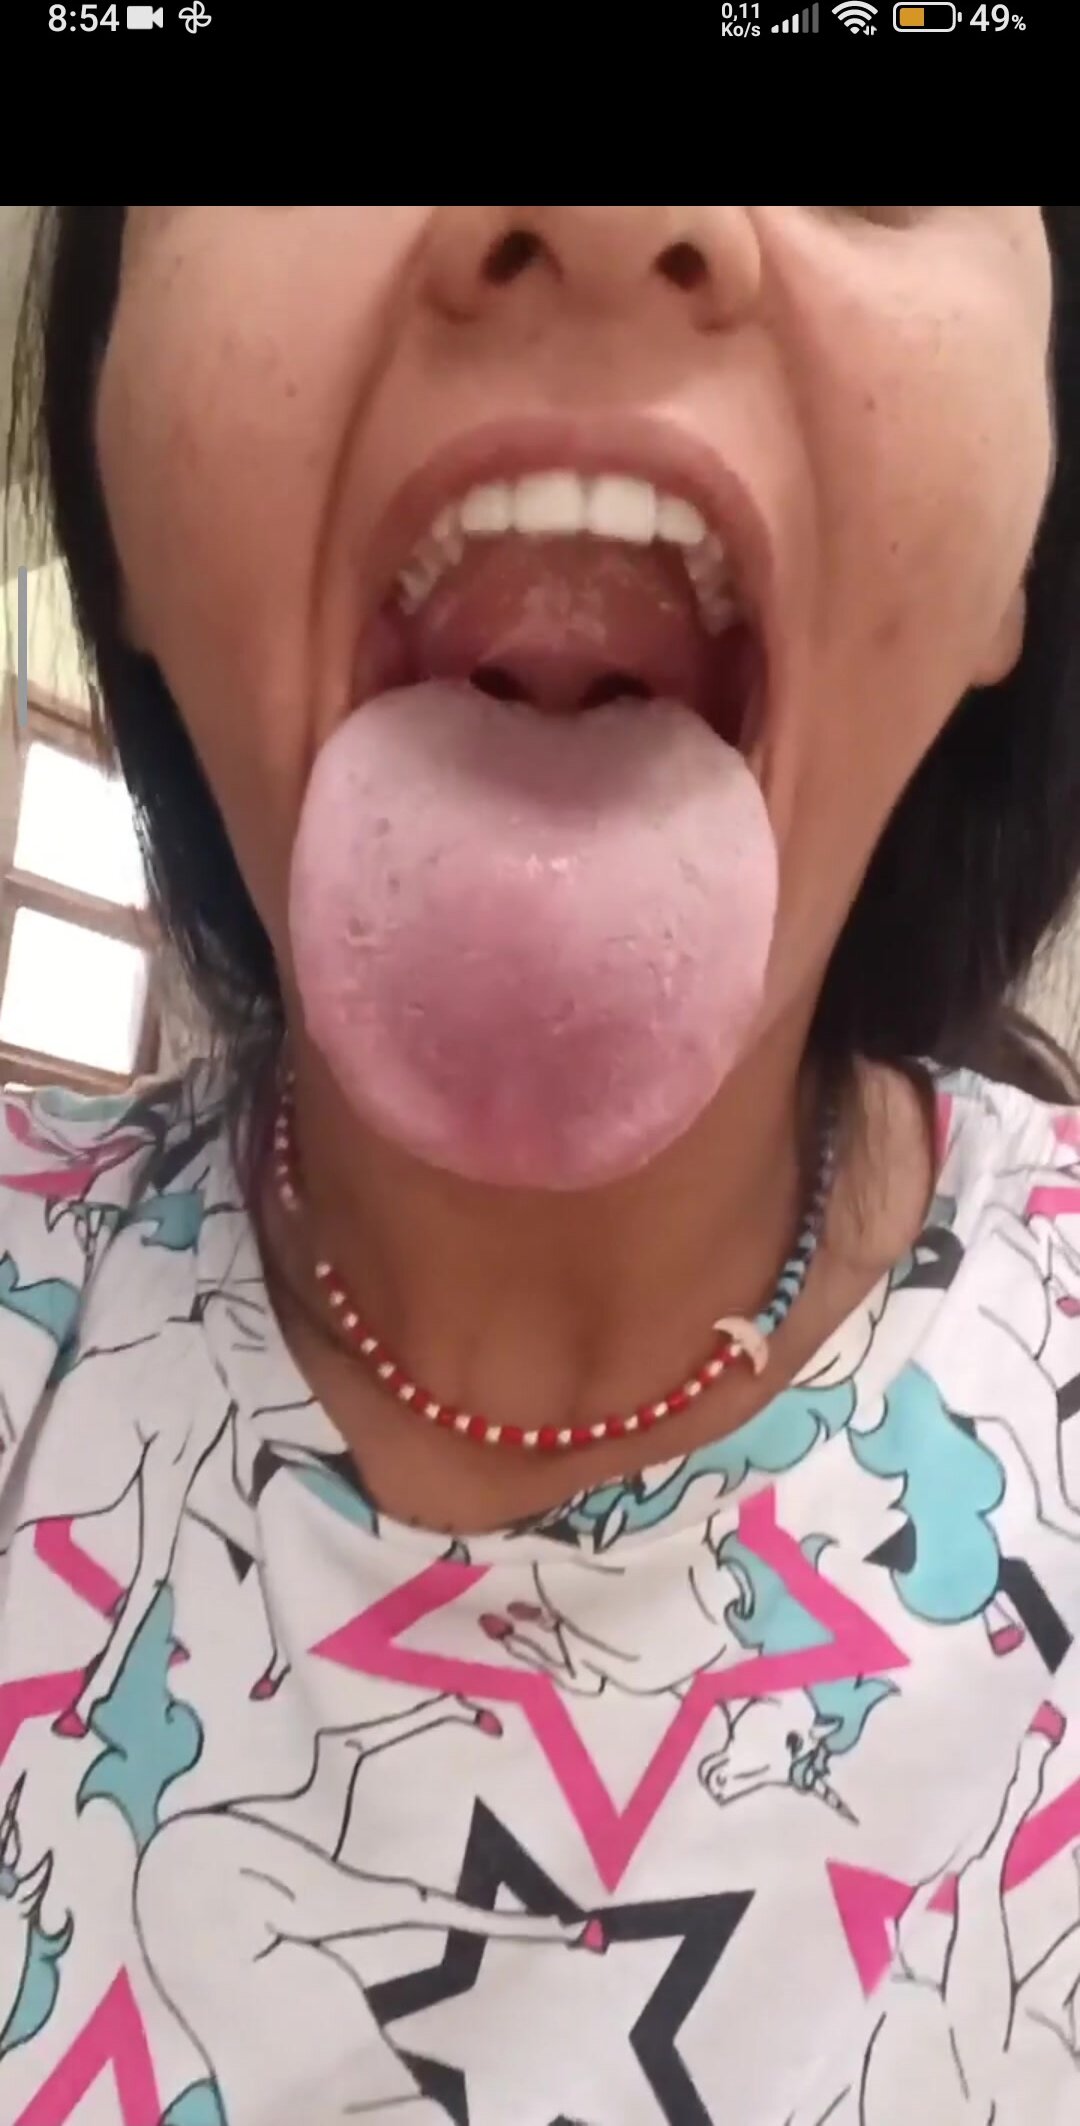 Tongue fetish - video 28